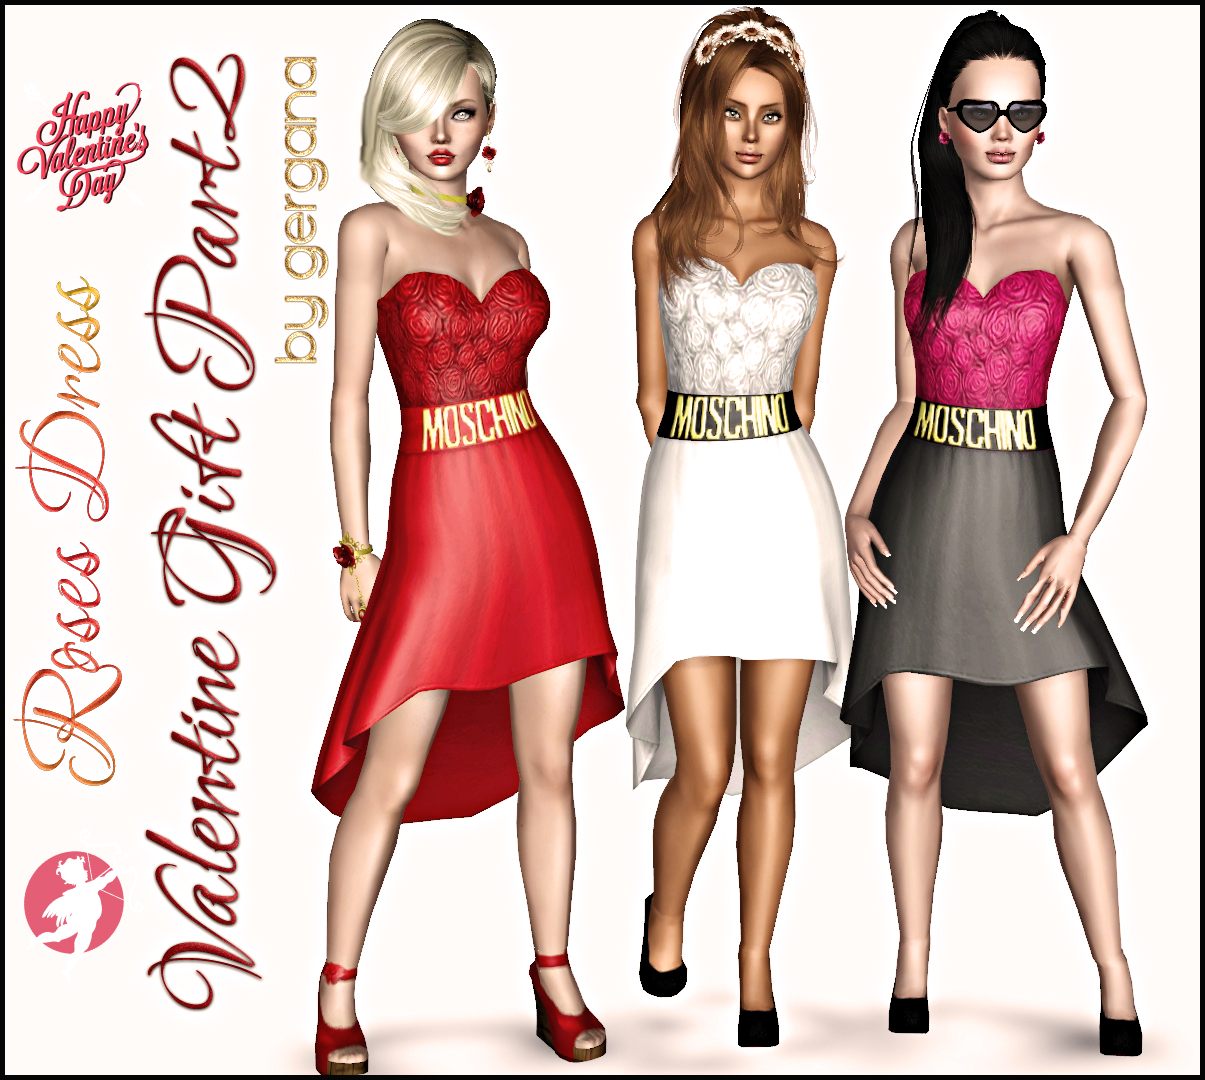 Roses Dress - The Sims 3 Catalog